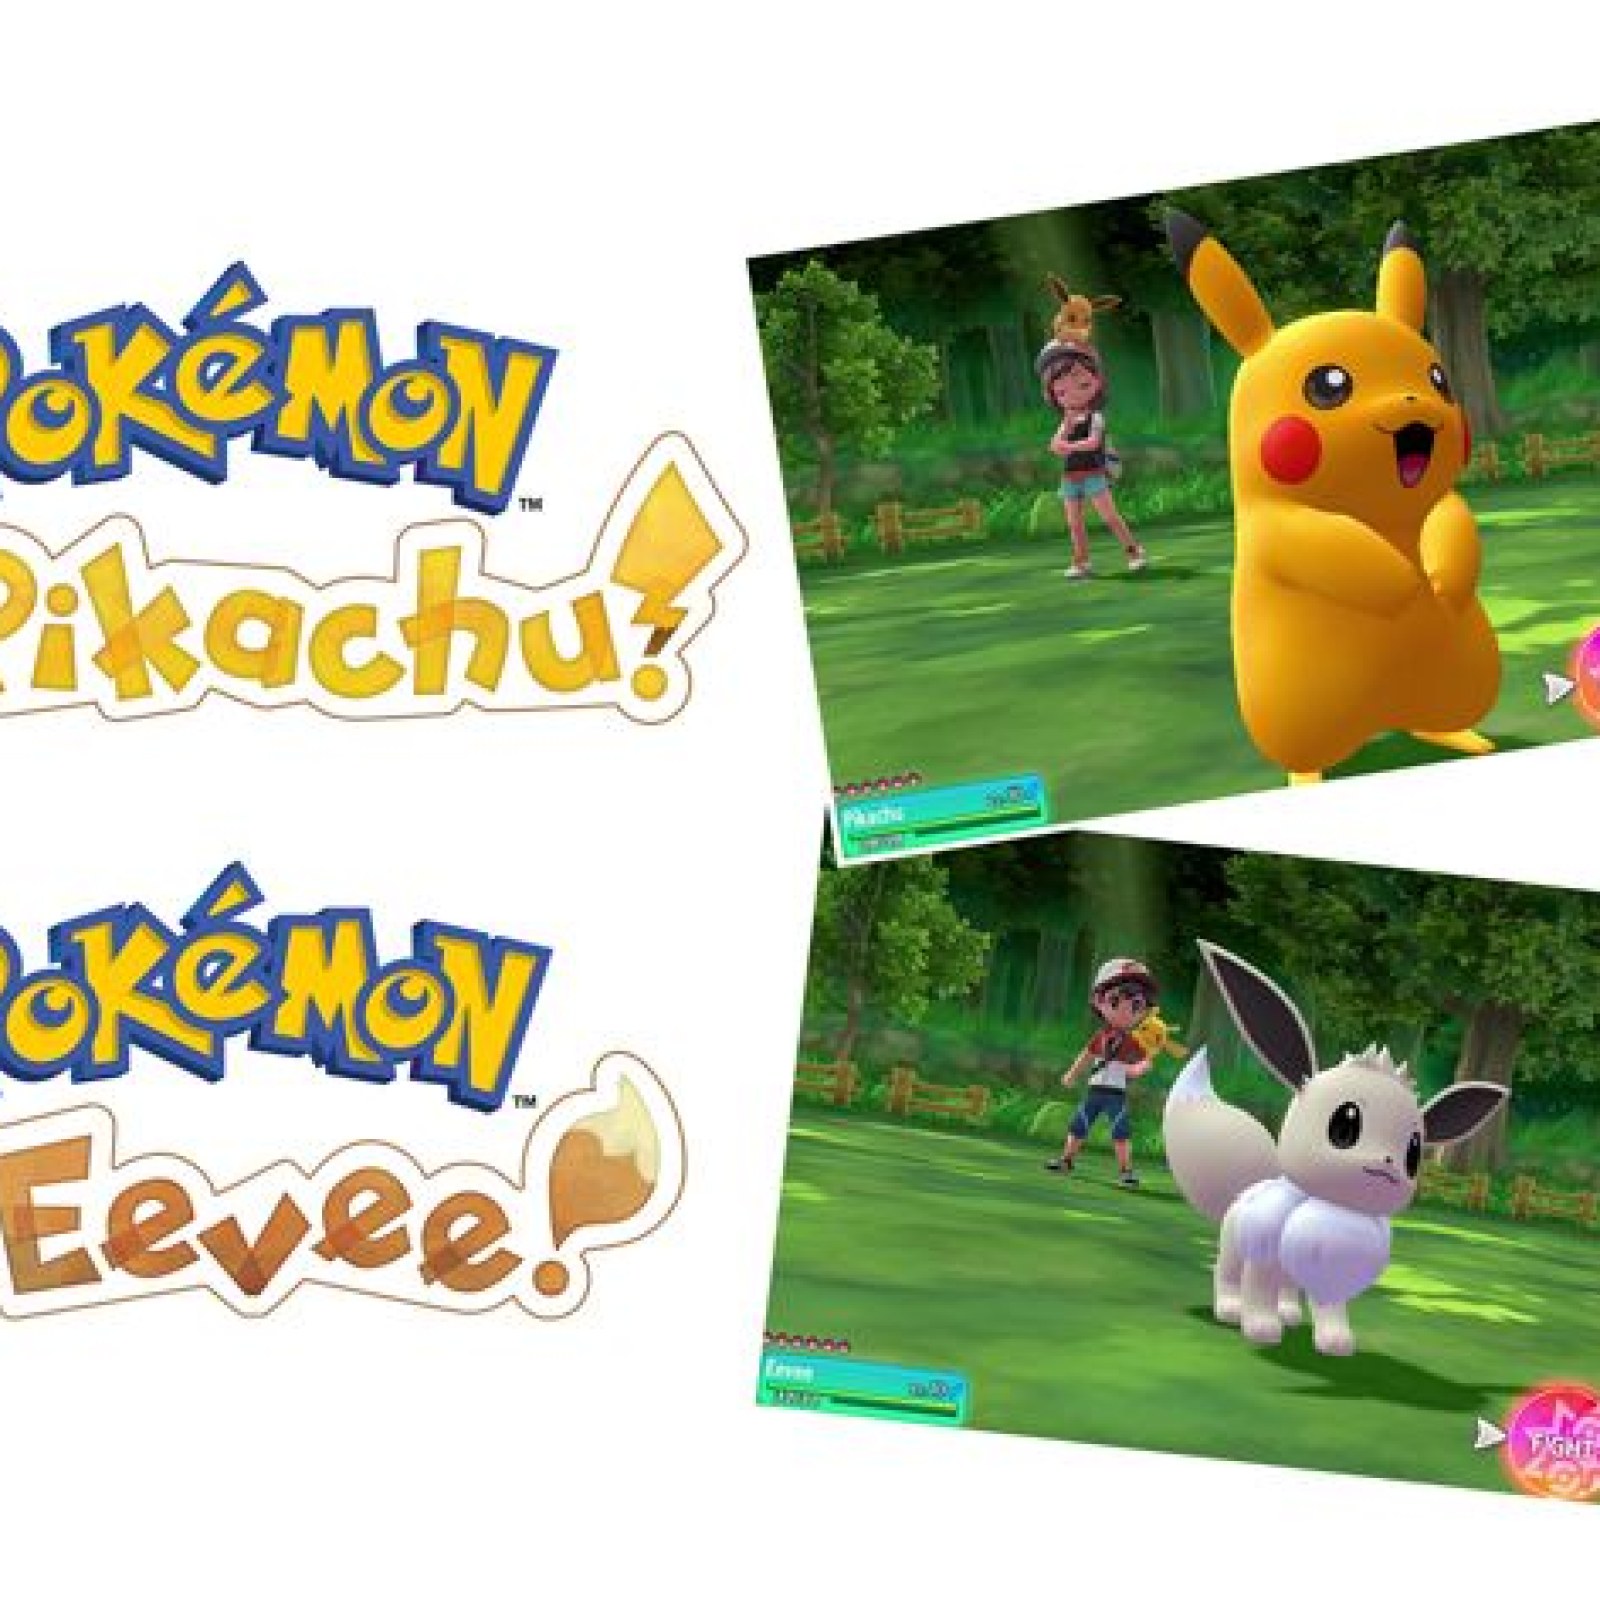 Pokemon GO Shiny Pikachu Guide: How To Catch Shiny Pikachu And